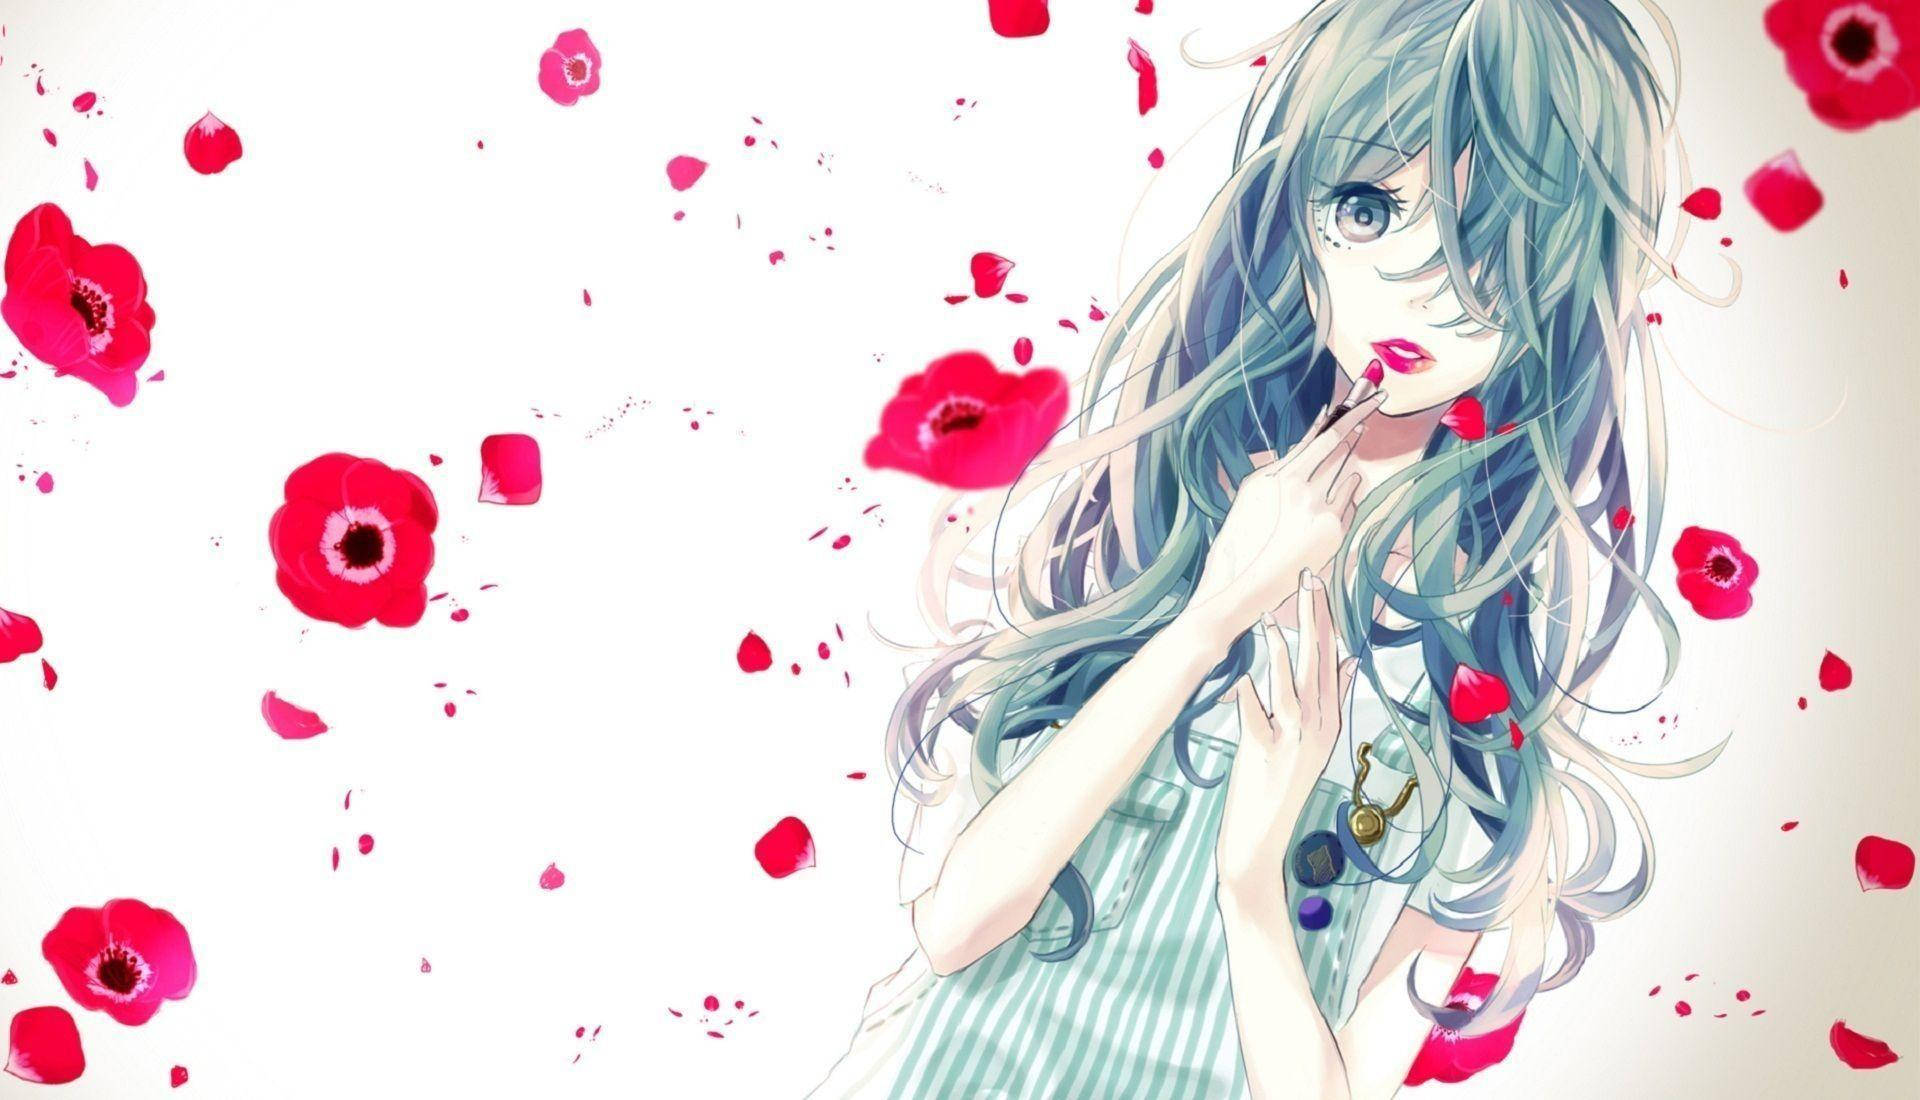 Kawaii Anime Girl With Red Lipstick And Petals Wallpaper